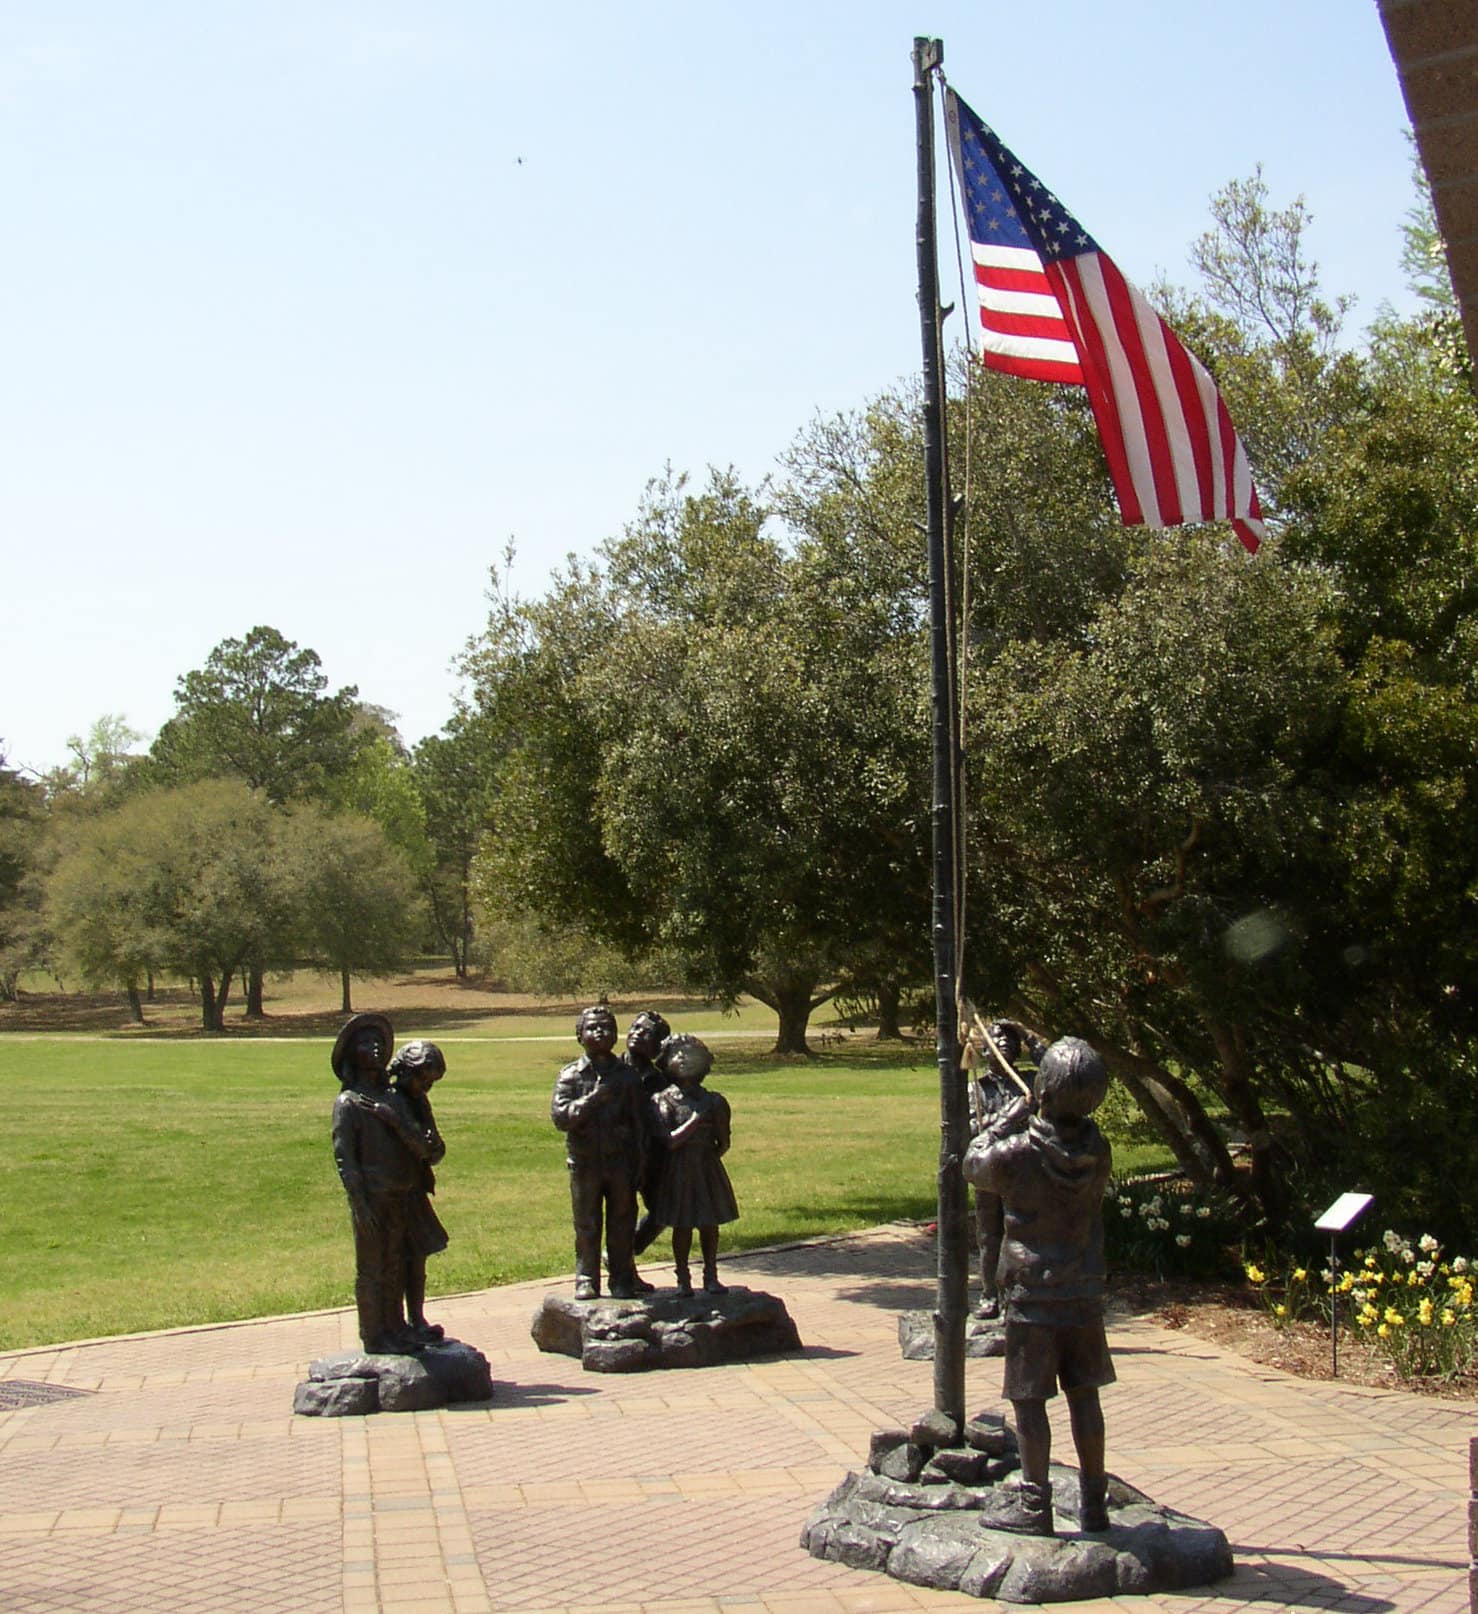 Kids at Flag statue - Brookgreen, South Carolina